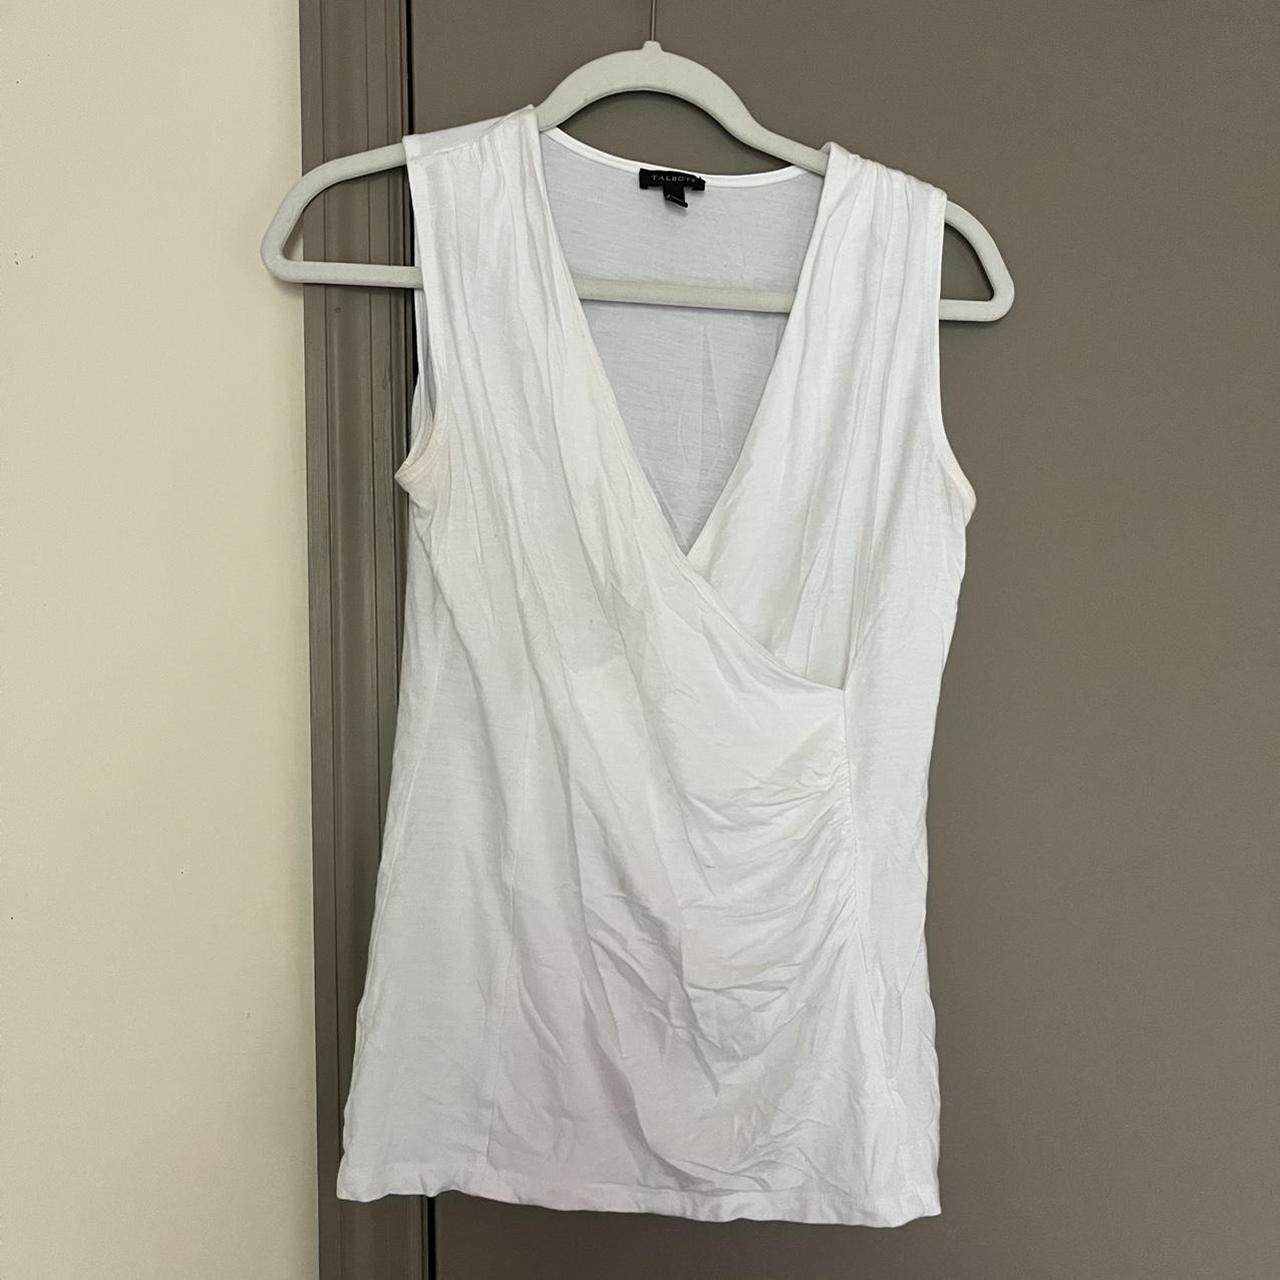 Product Image 1 - Talbots white wrap top

@depop #wraptop